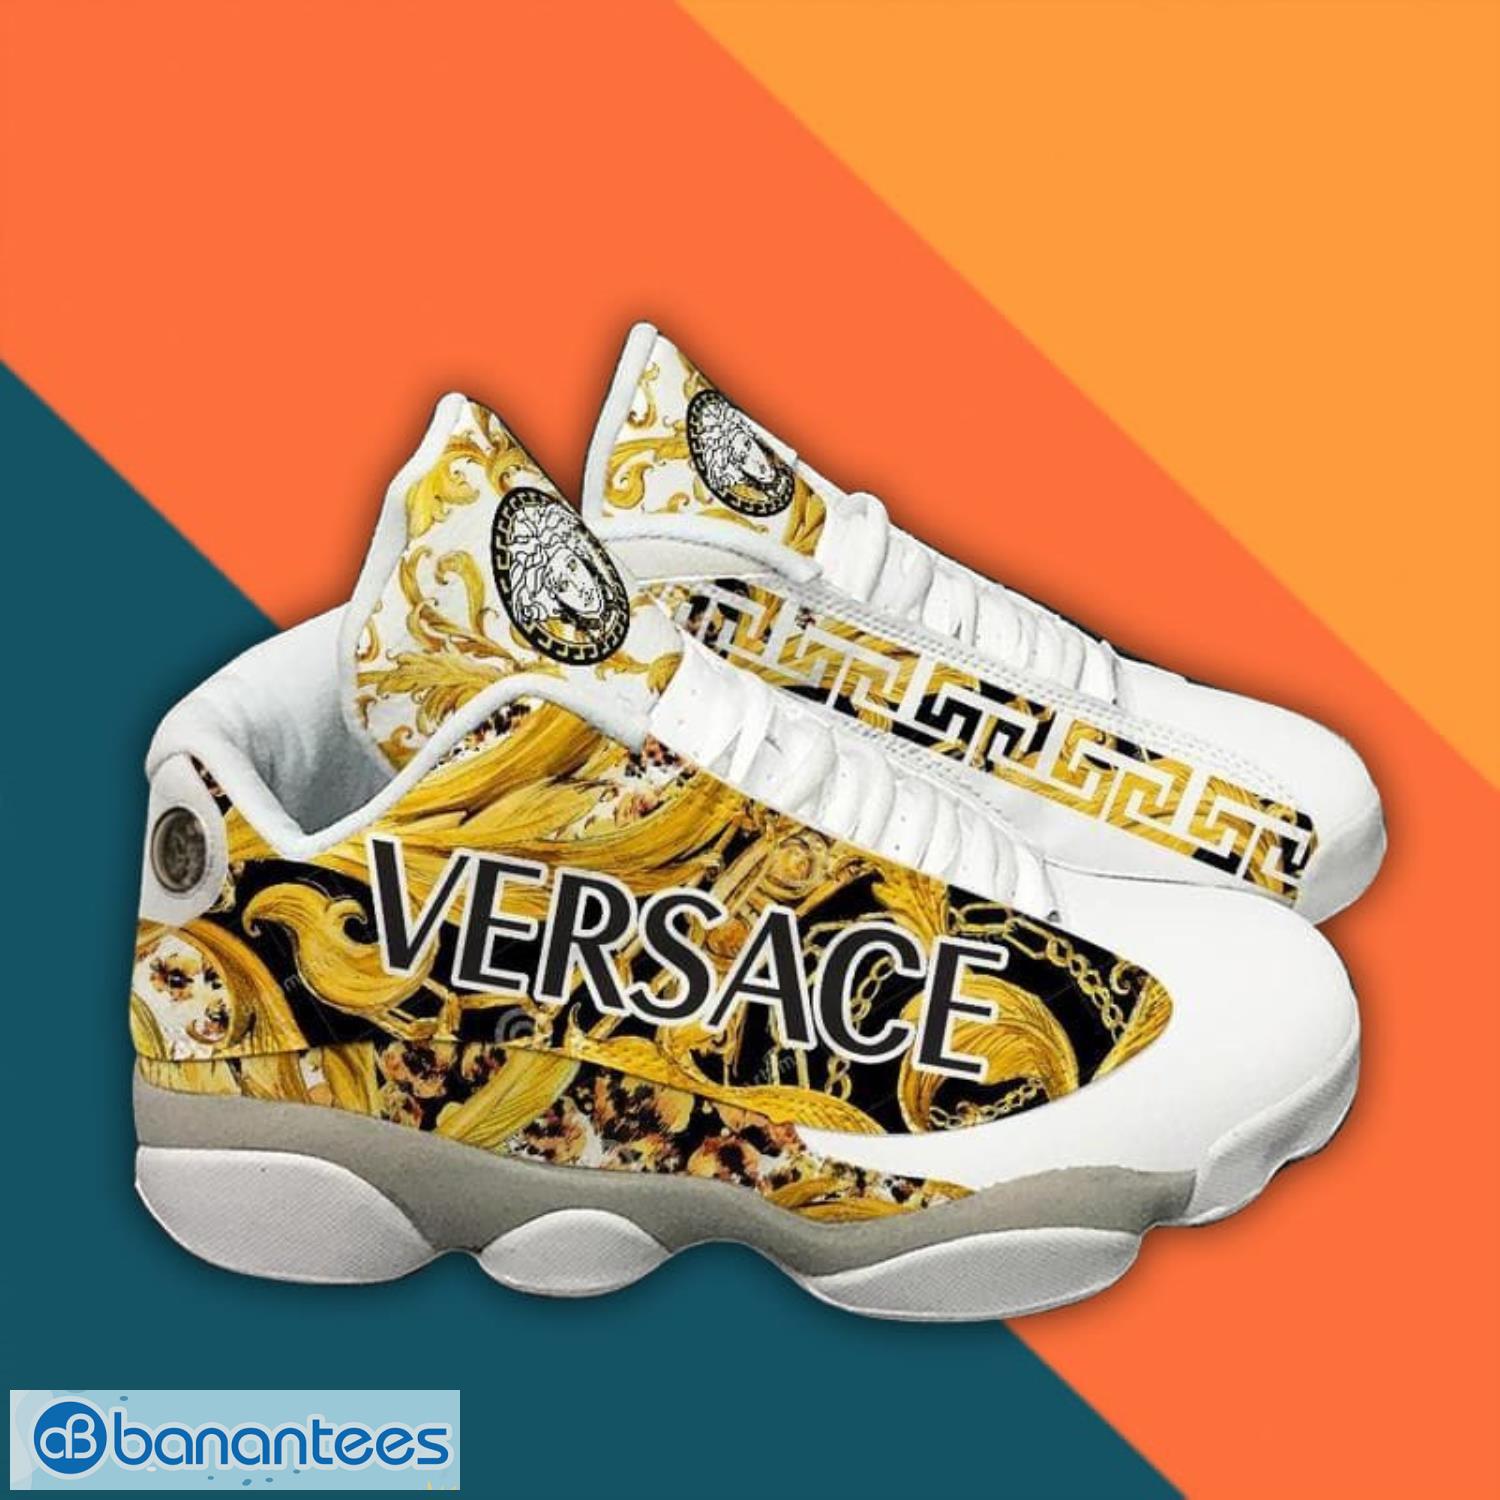 Versace Golden Shoes Air Jordan 13 Sneaker Product Photo 1